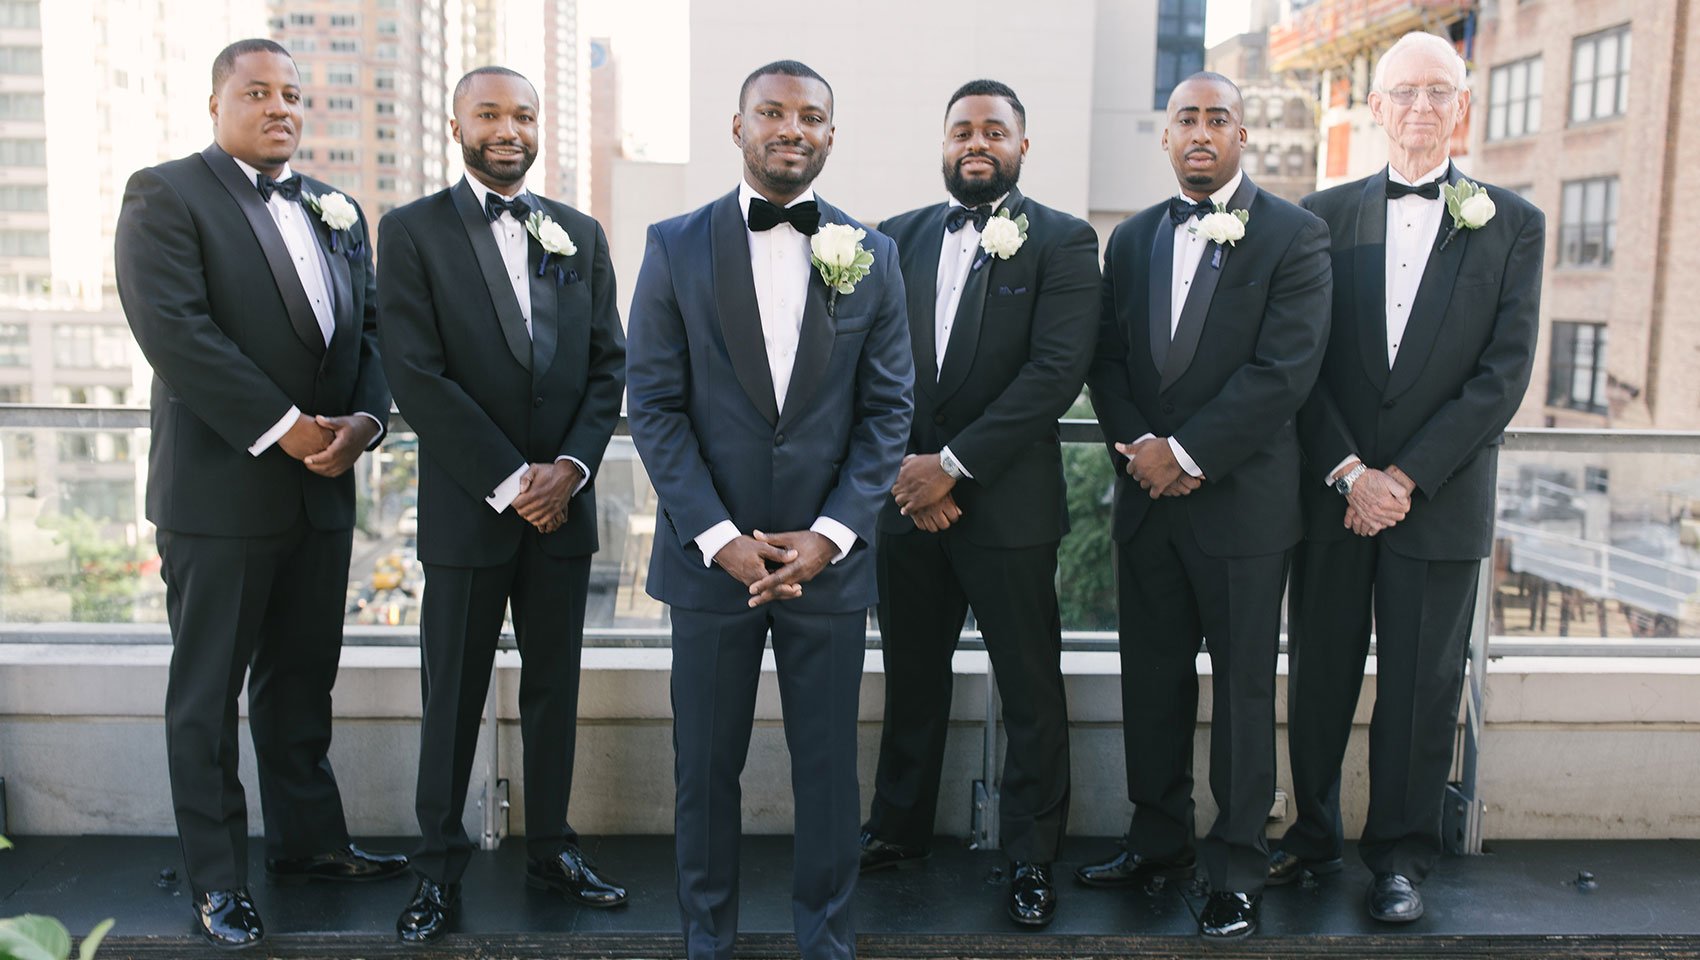 weddingsDaniel with his groomsmen in tuxedos on a balcony